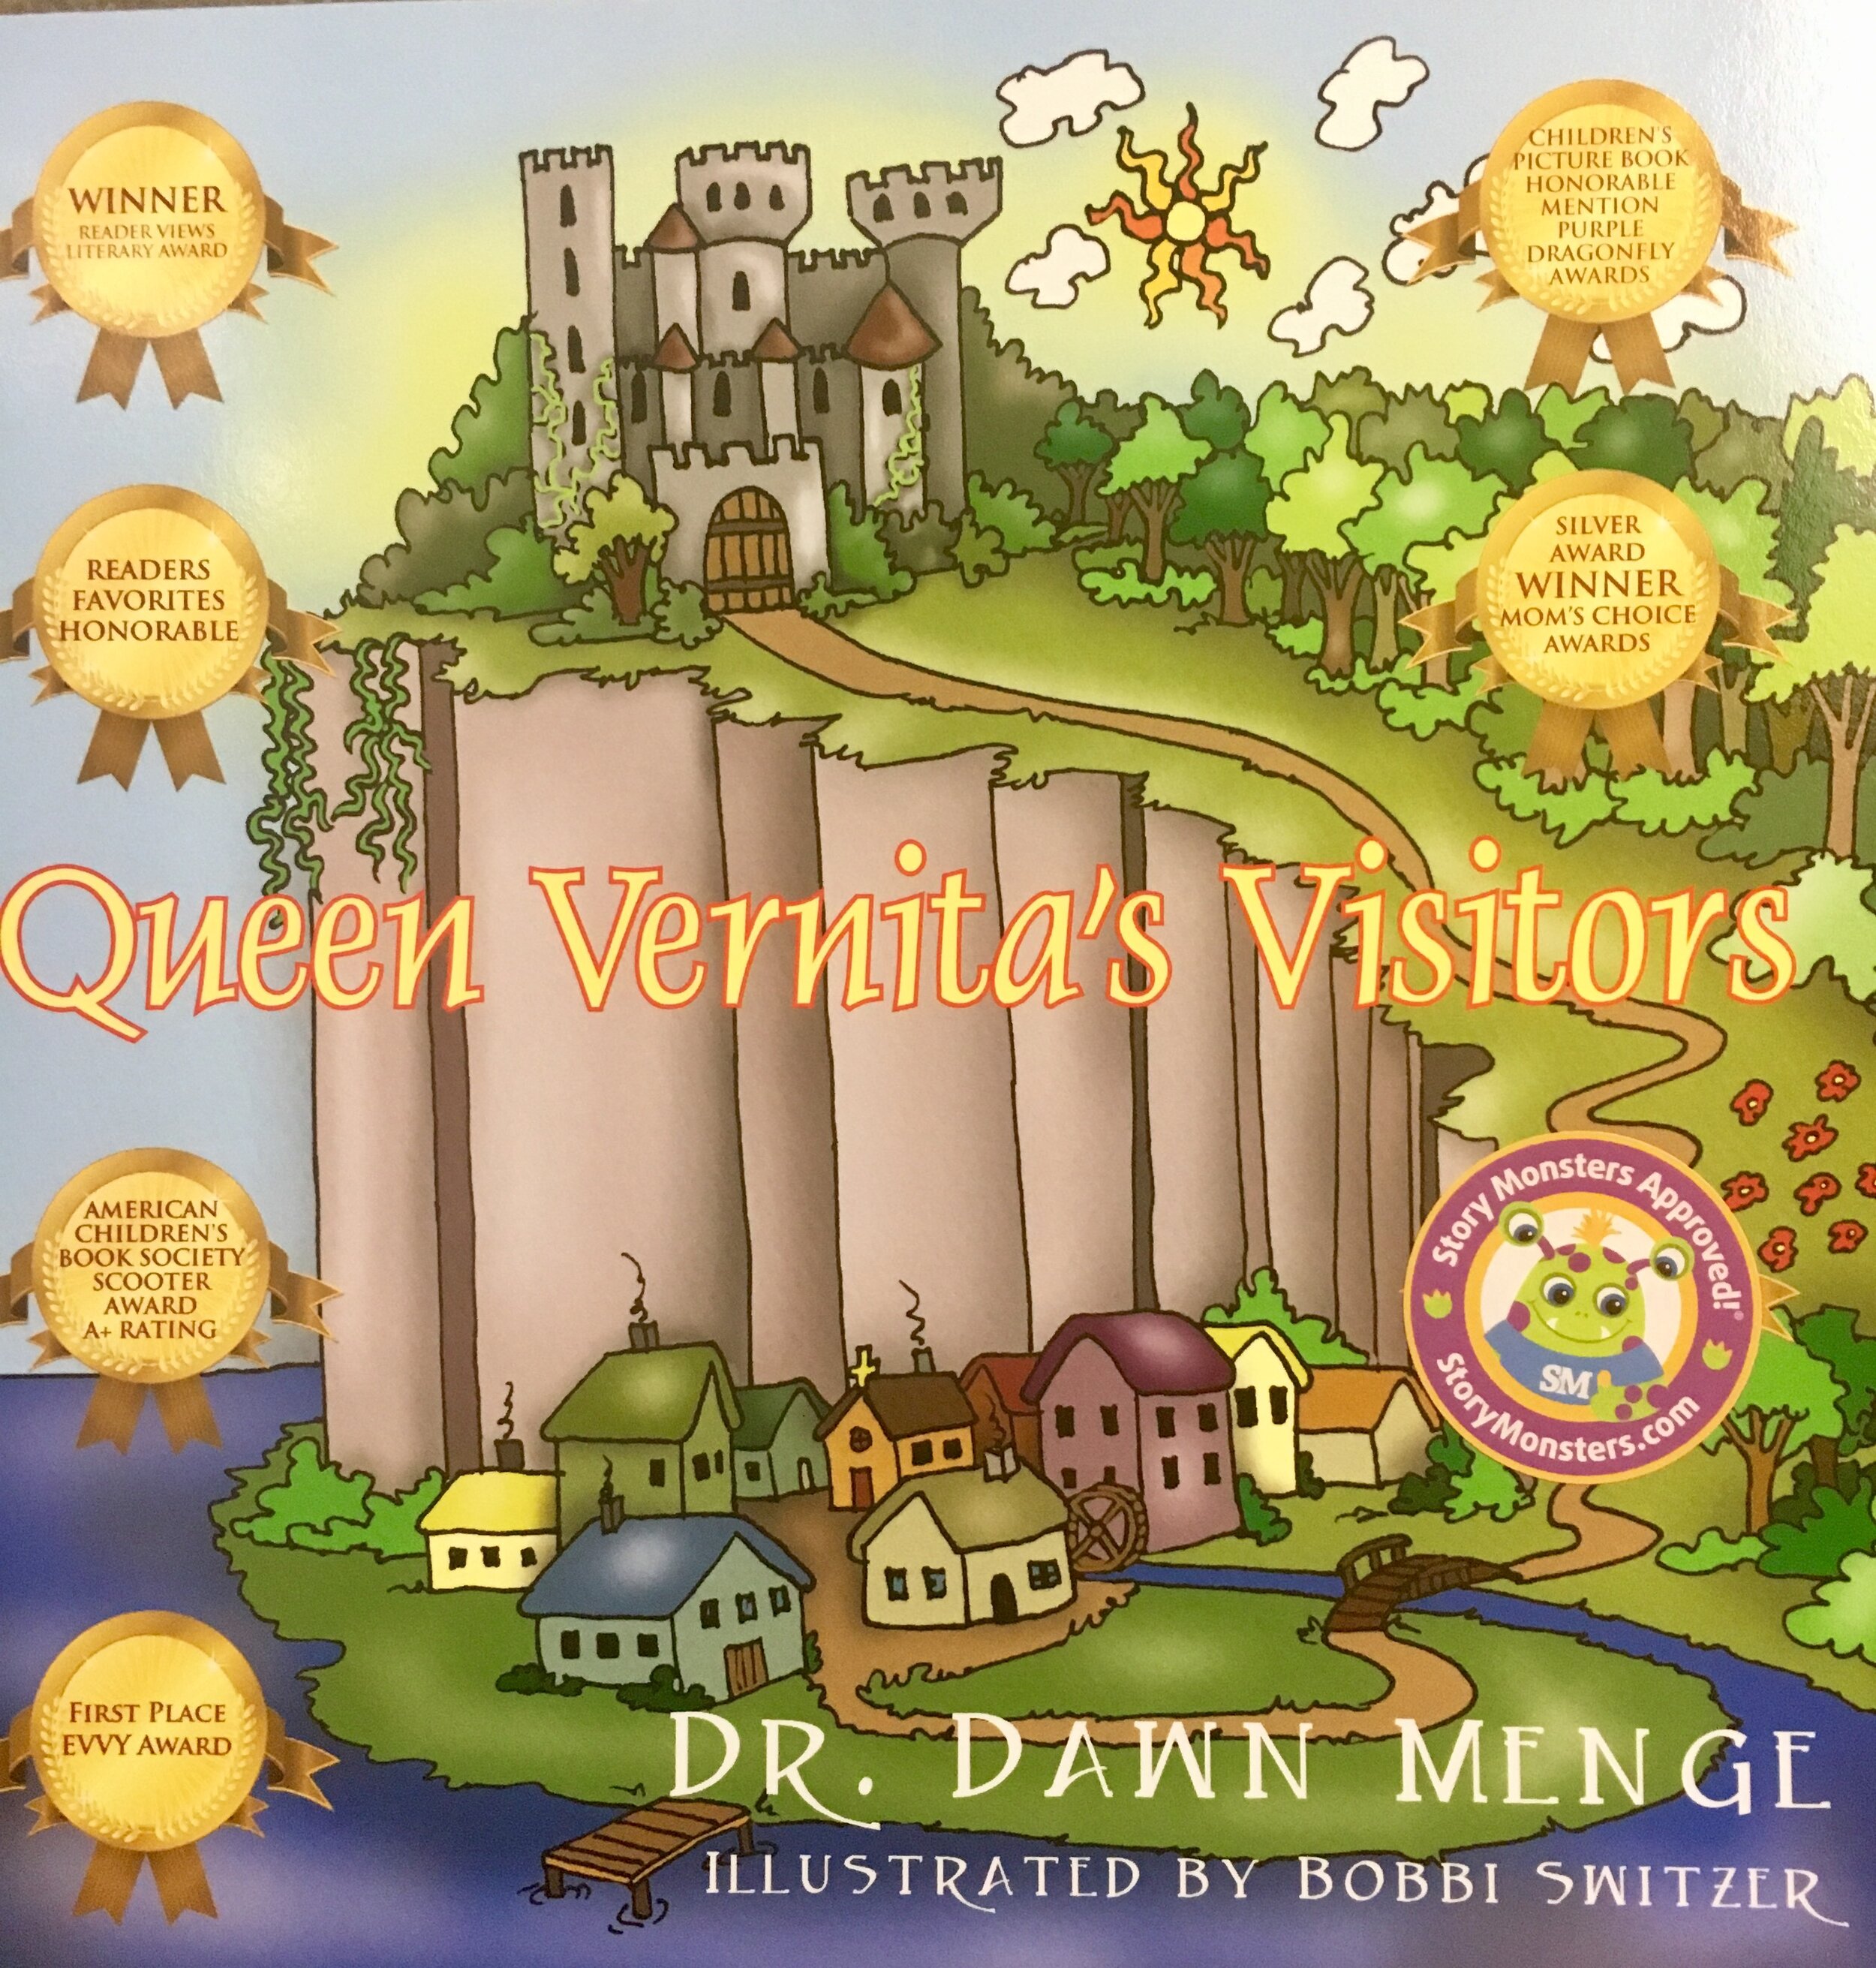  Queen Vernita's Visitors 